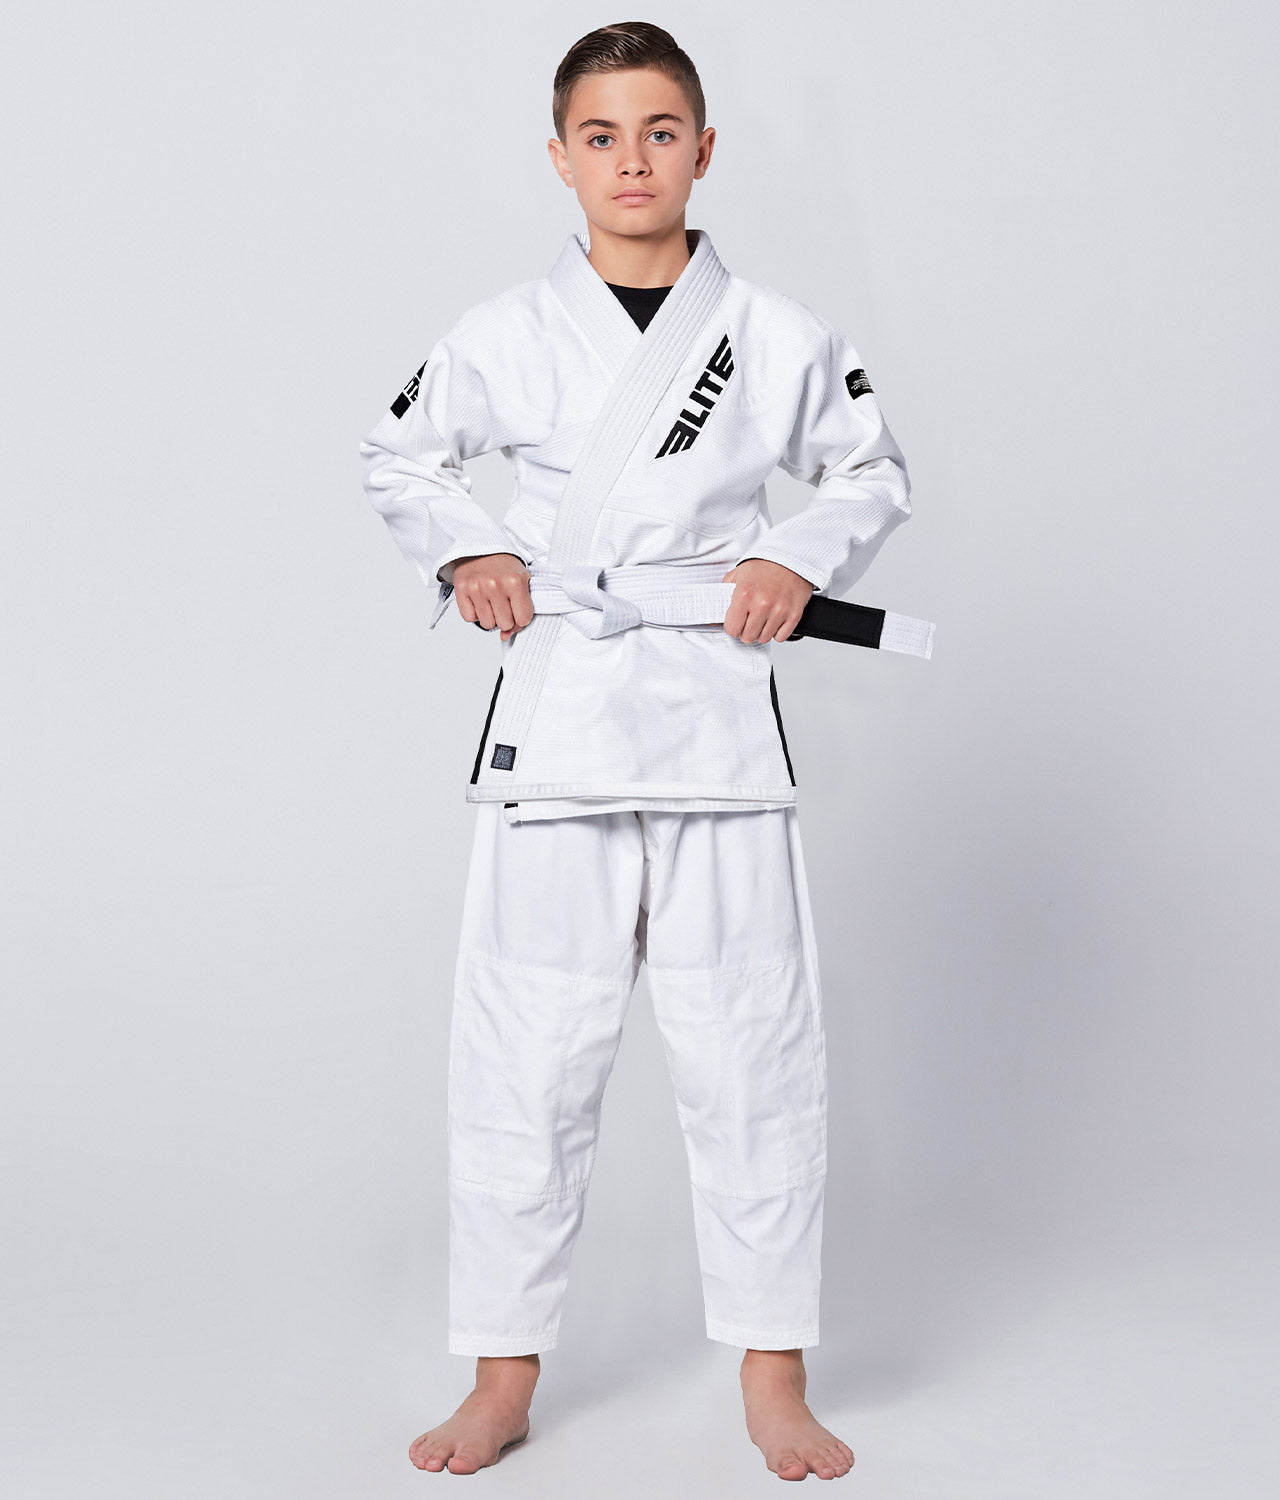 Elite Sports Kids' Jiu Jitsu BJJ White Belt Full Look